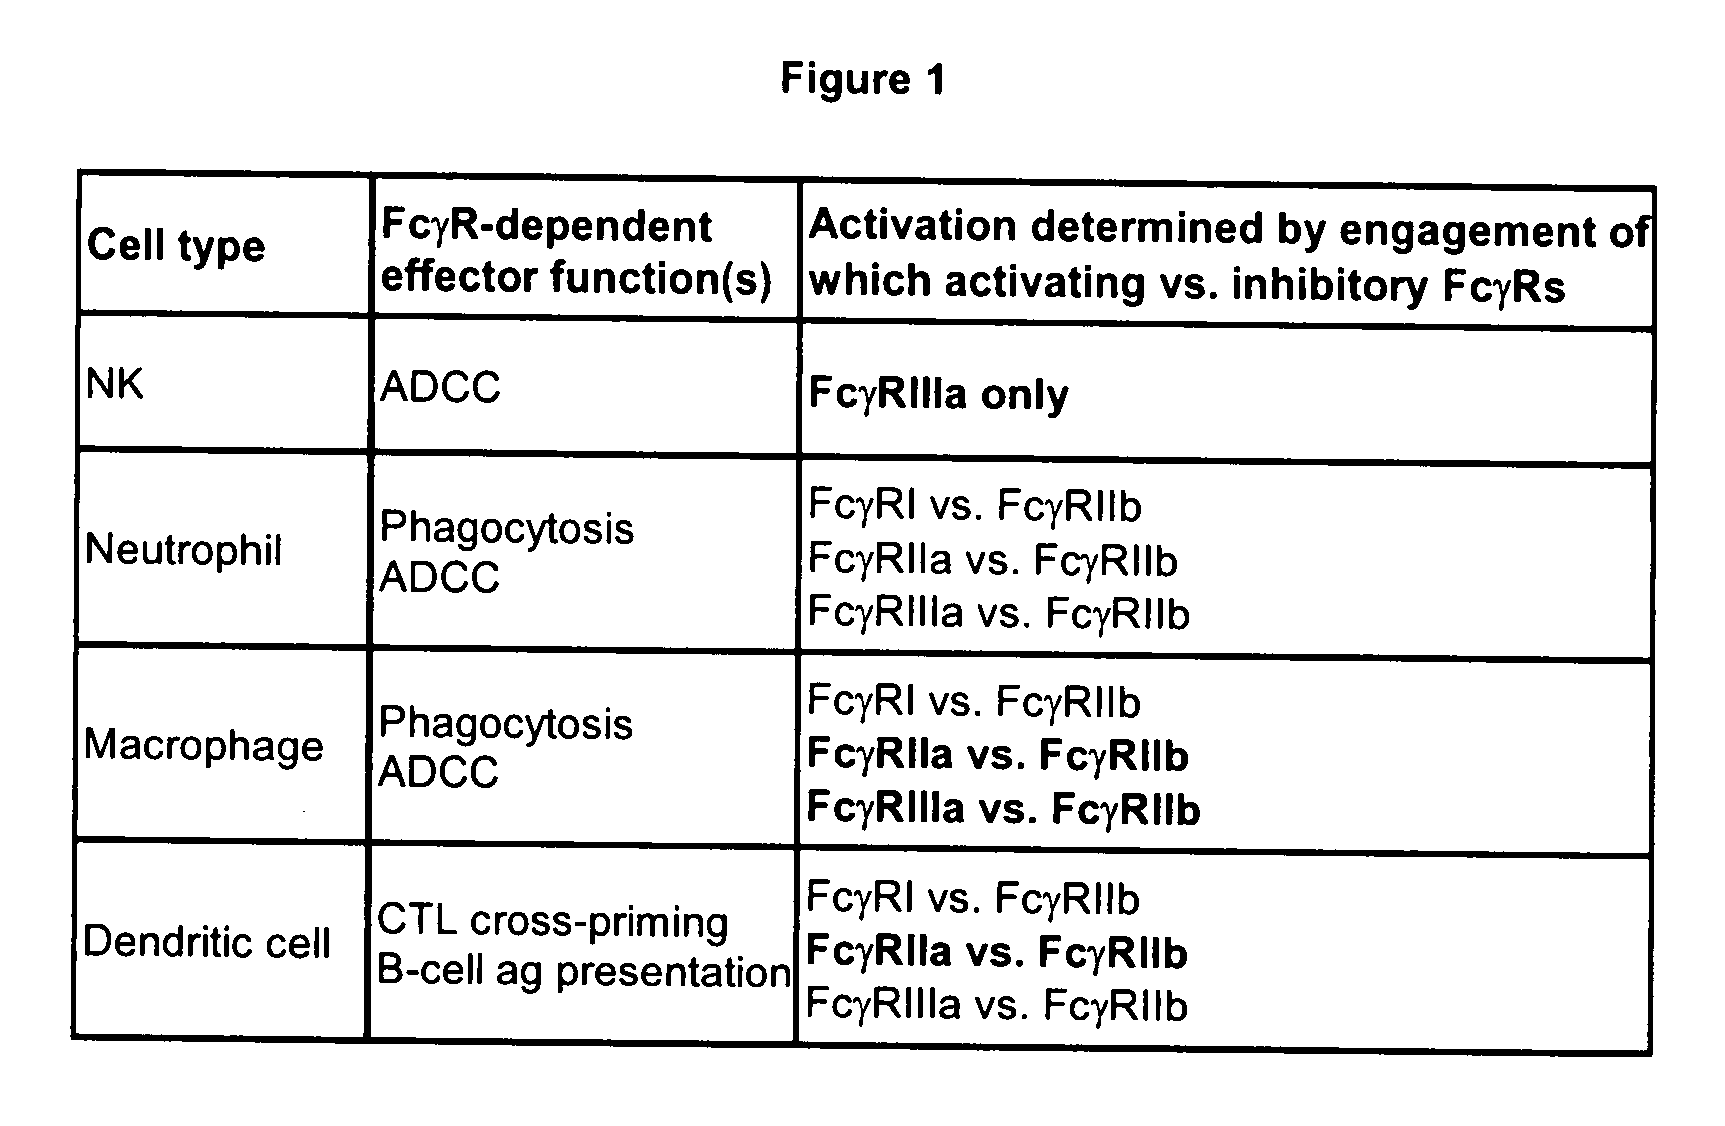 Fc variants with optimized Fc receptor binding properties